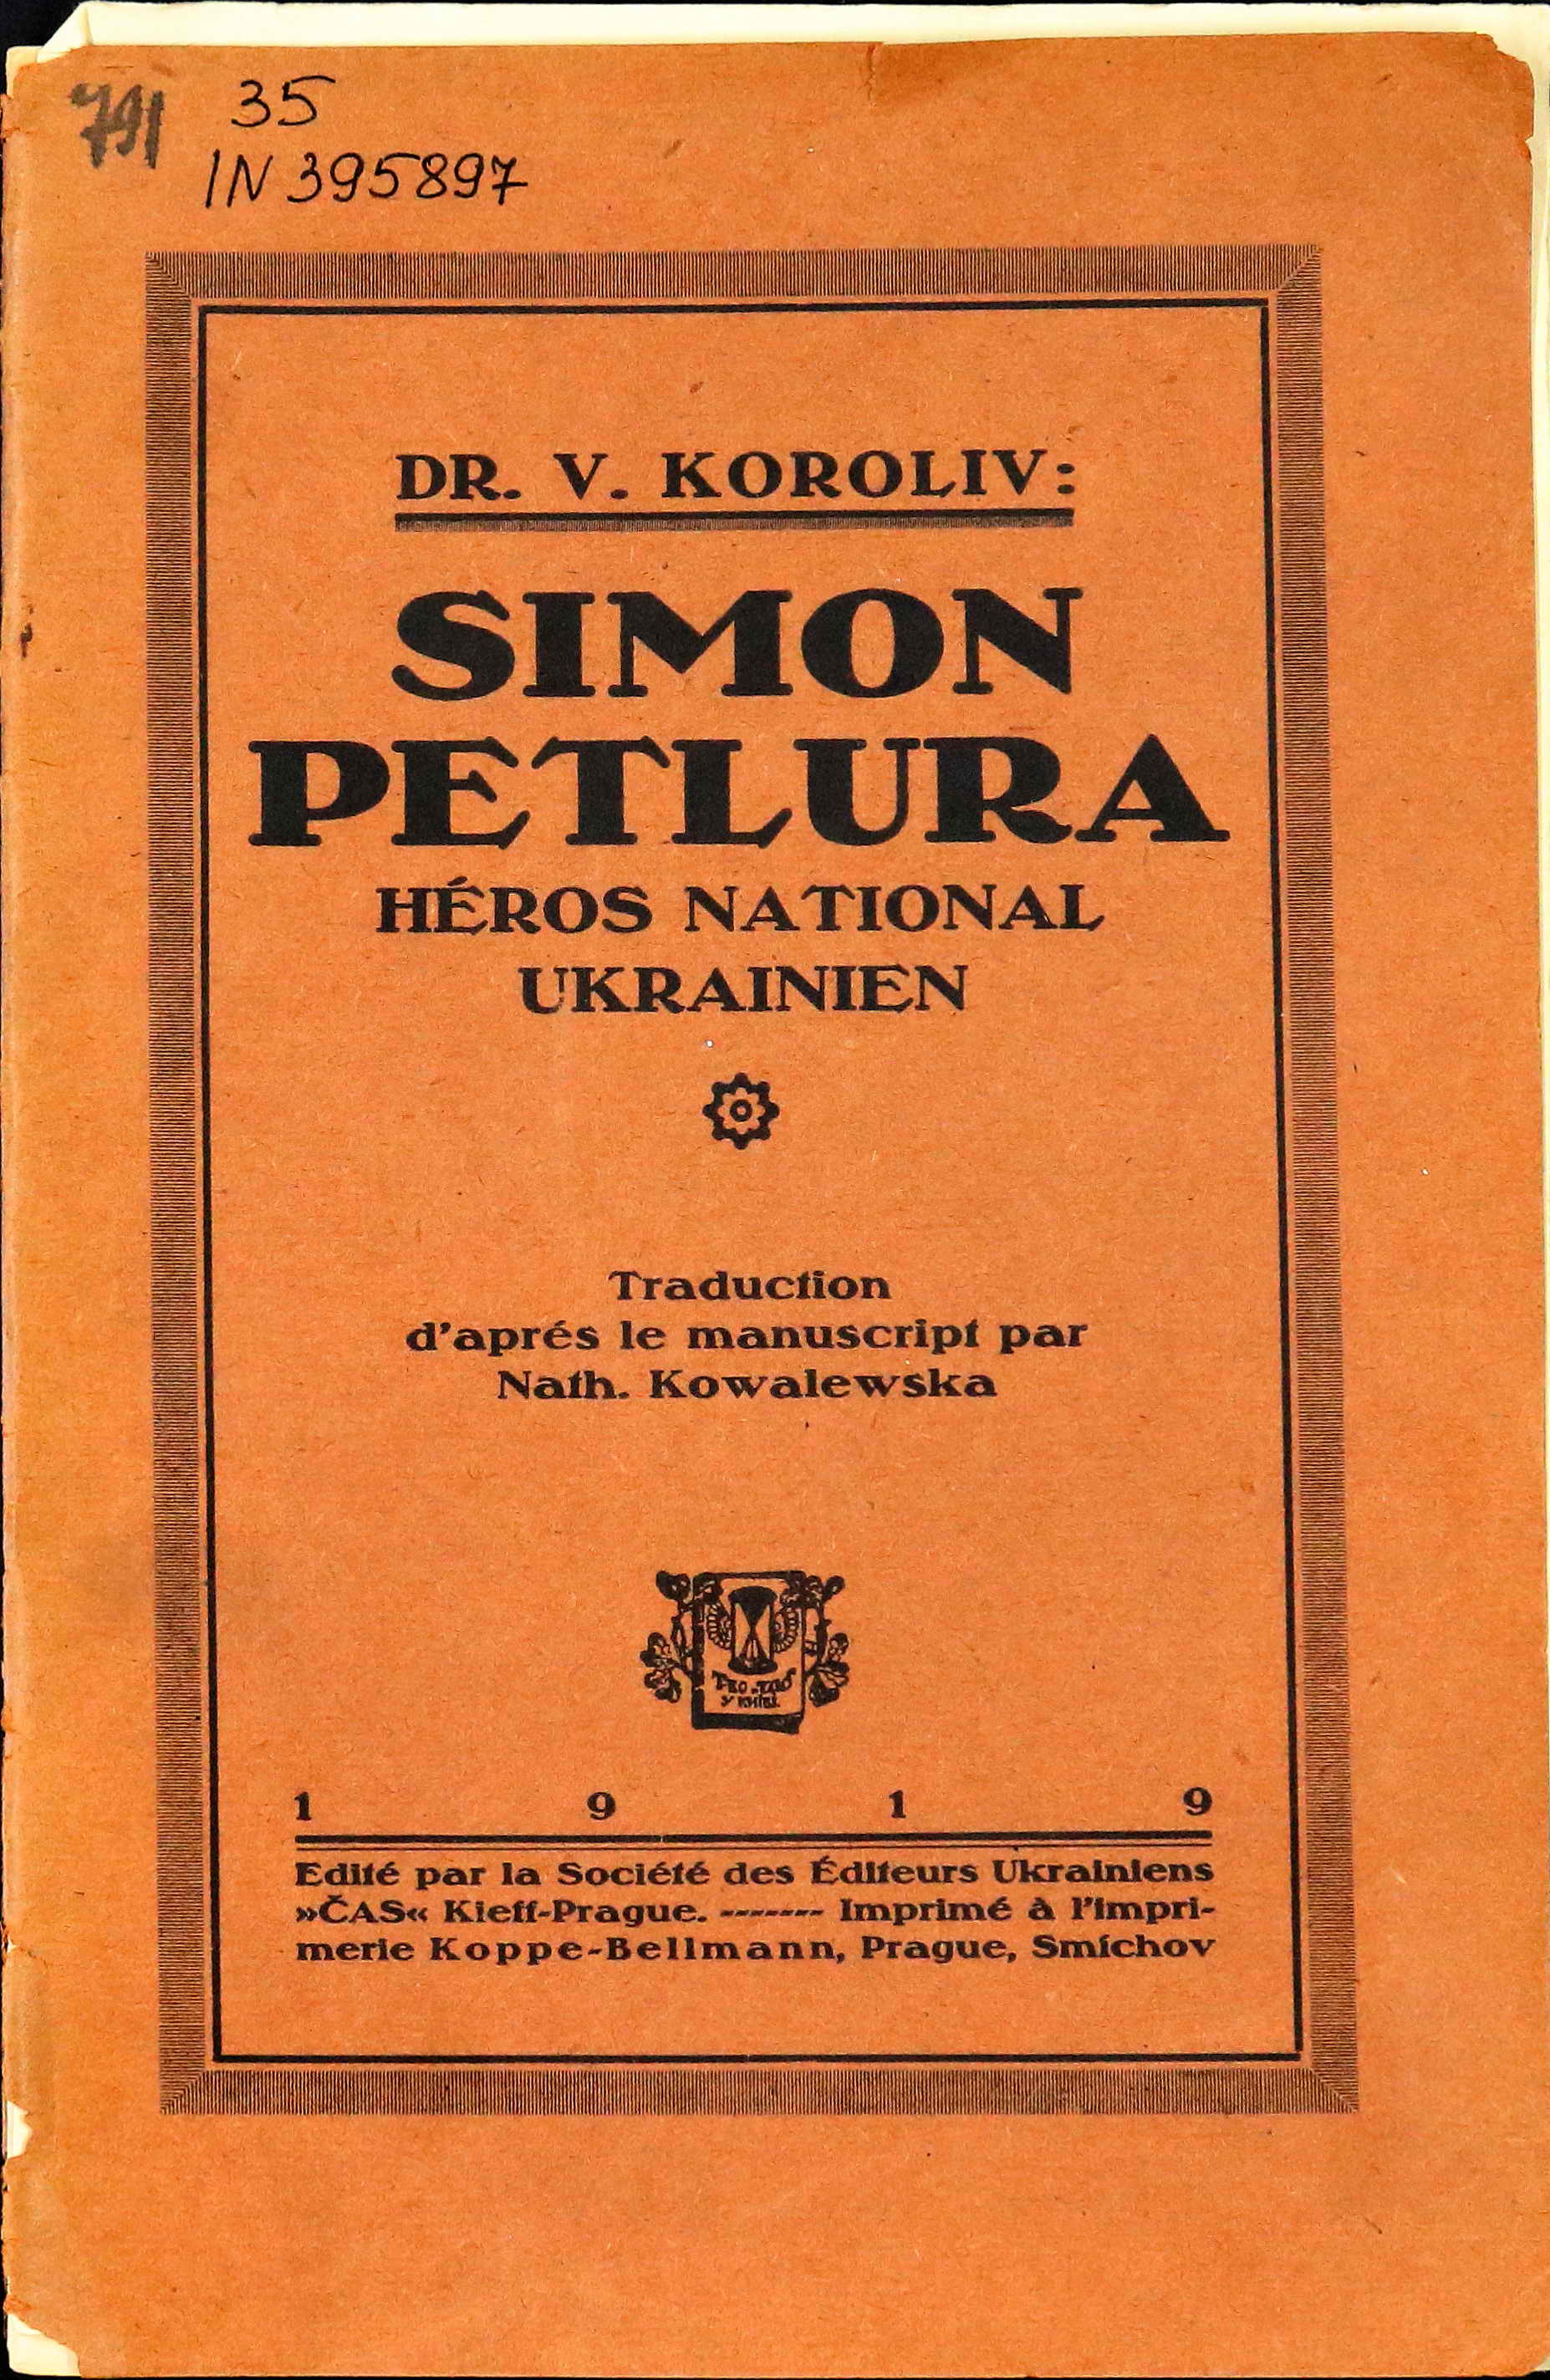 Simon Petlura, héros national ukrainien